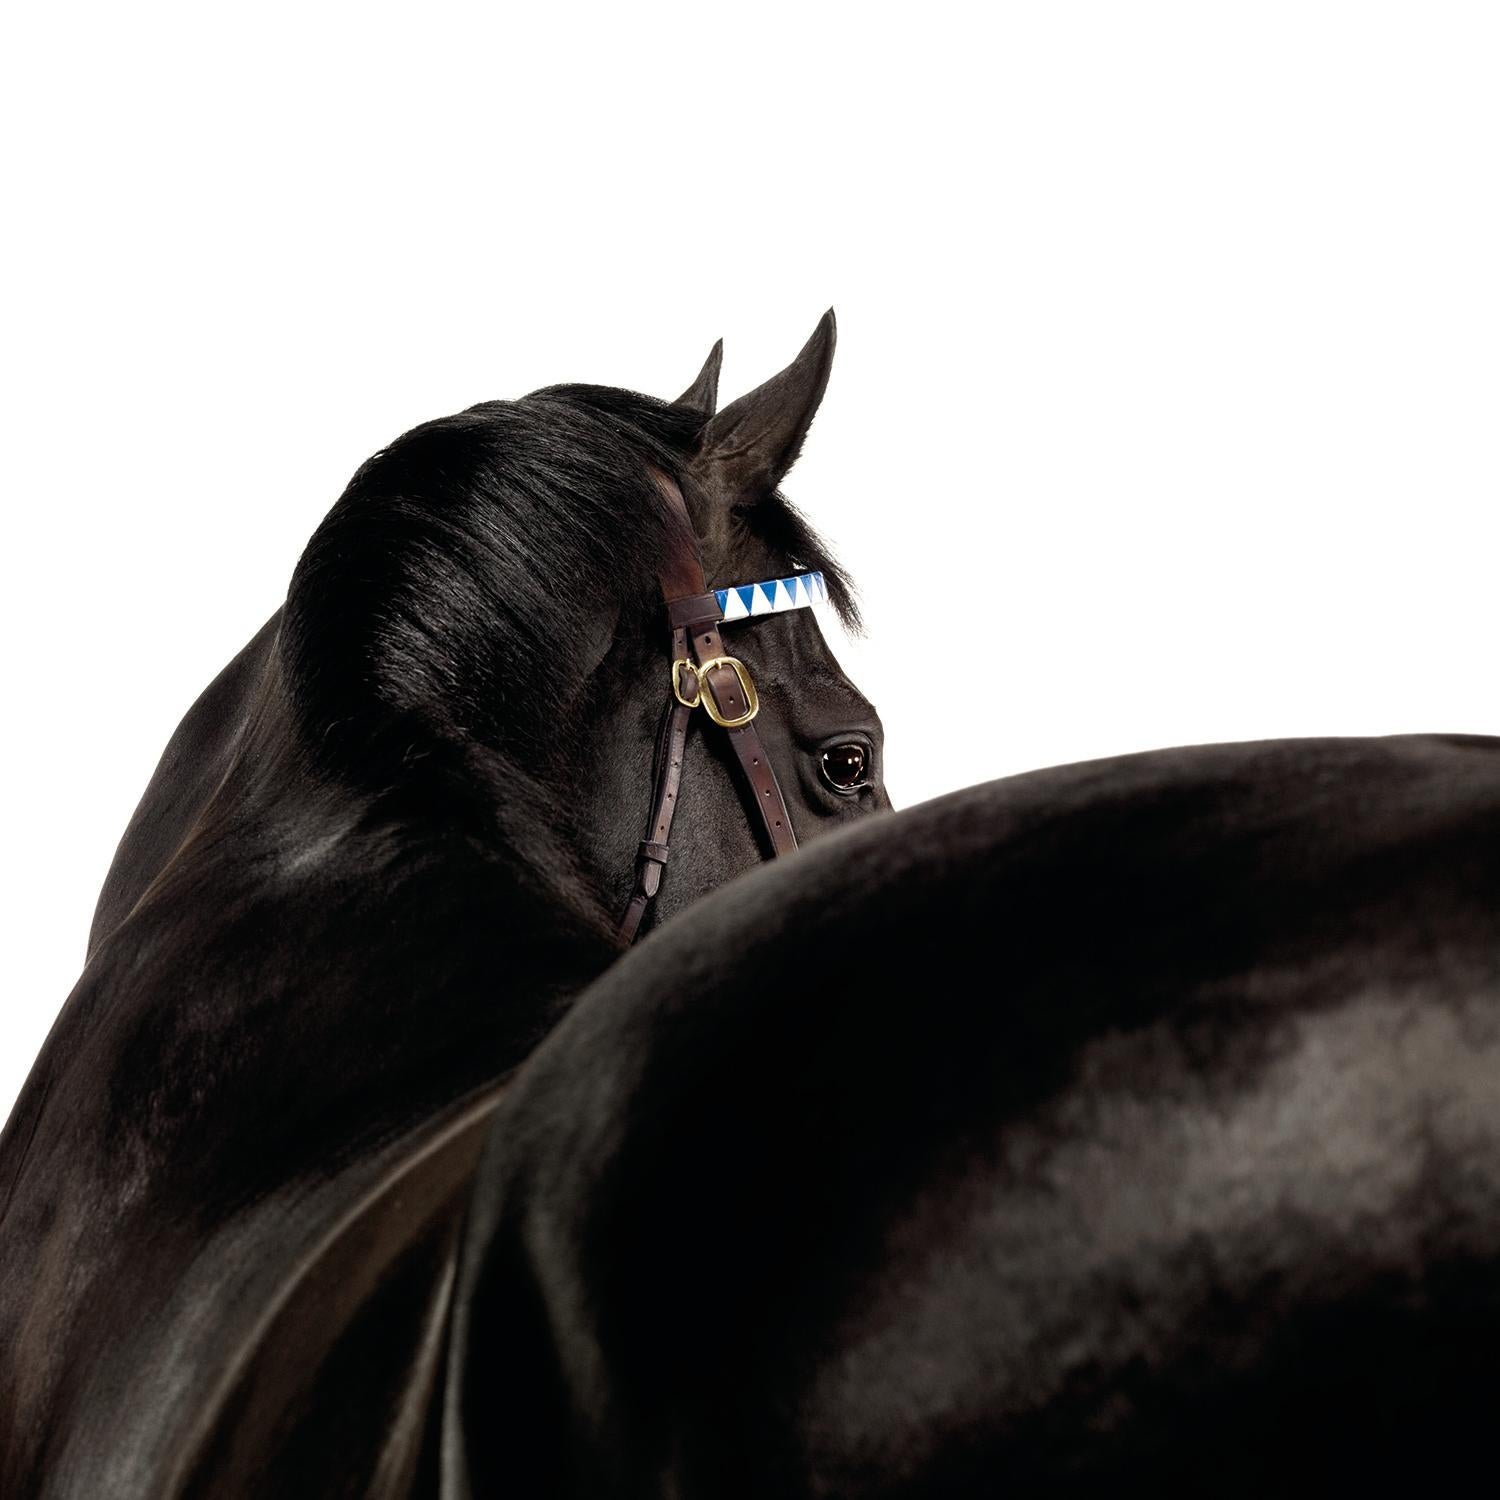 Manduro - World Champion Thoroughbred racehorse - Studio Portrait Print